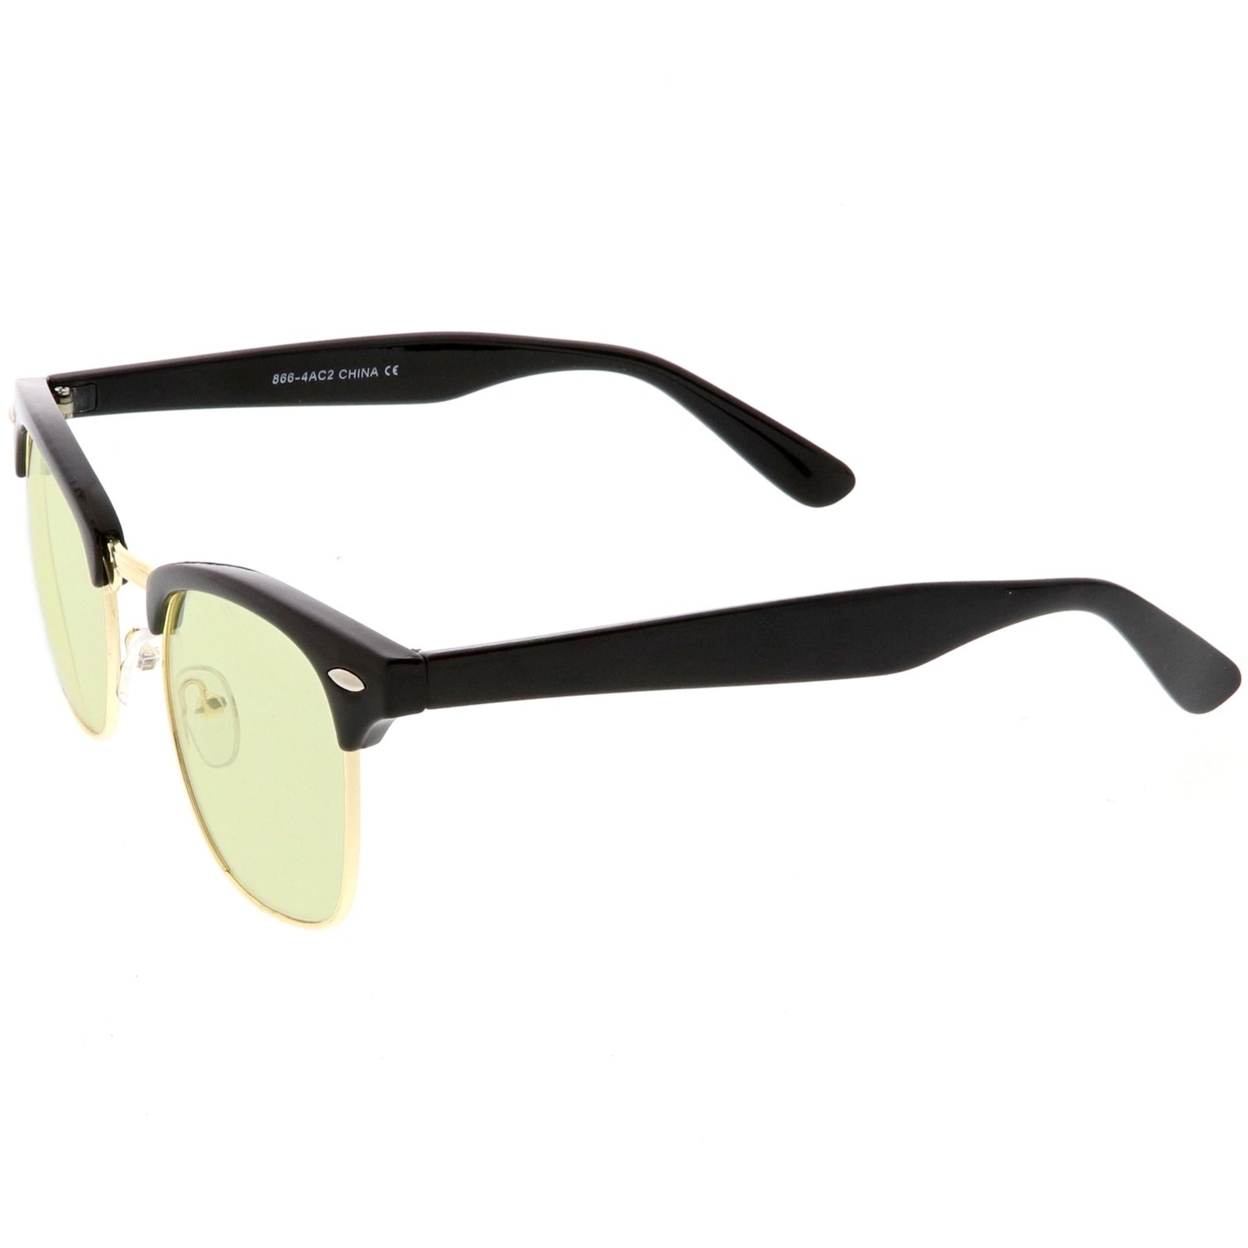 Modern Horn Rimmed Sunglasses Semi Rimless Color Tinted Square Lens 49mm - Black Gold / Blue